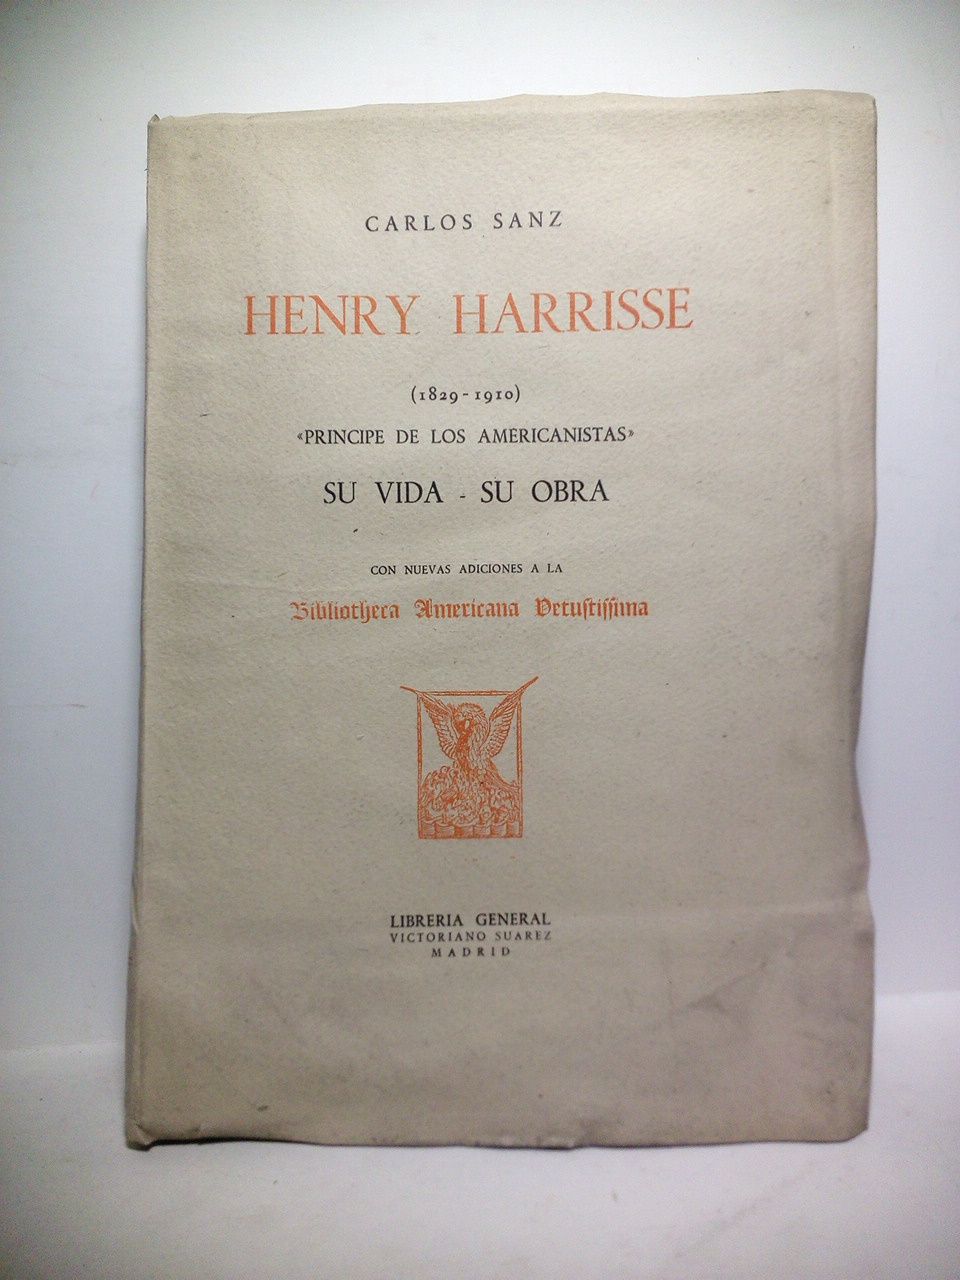 SANZ, Carlos [Henry Harrisse] - Henry Harrisse (1829 - 1910), 